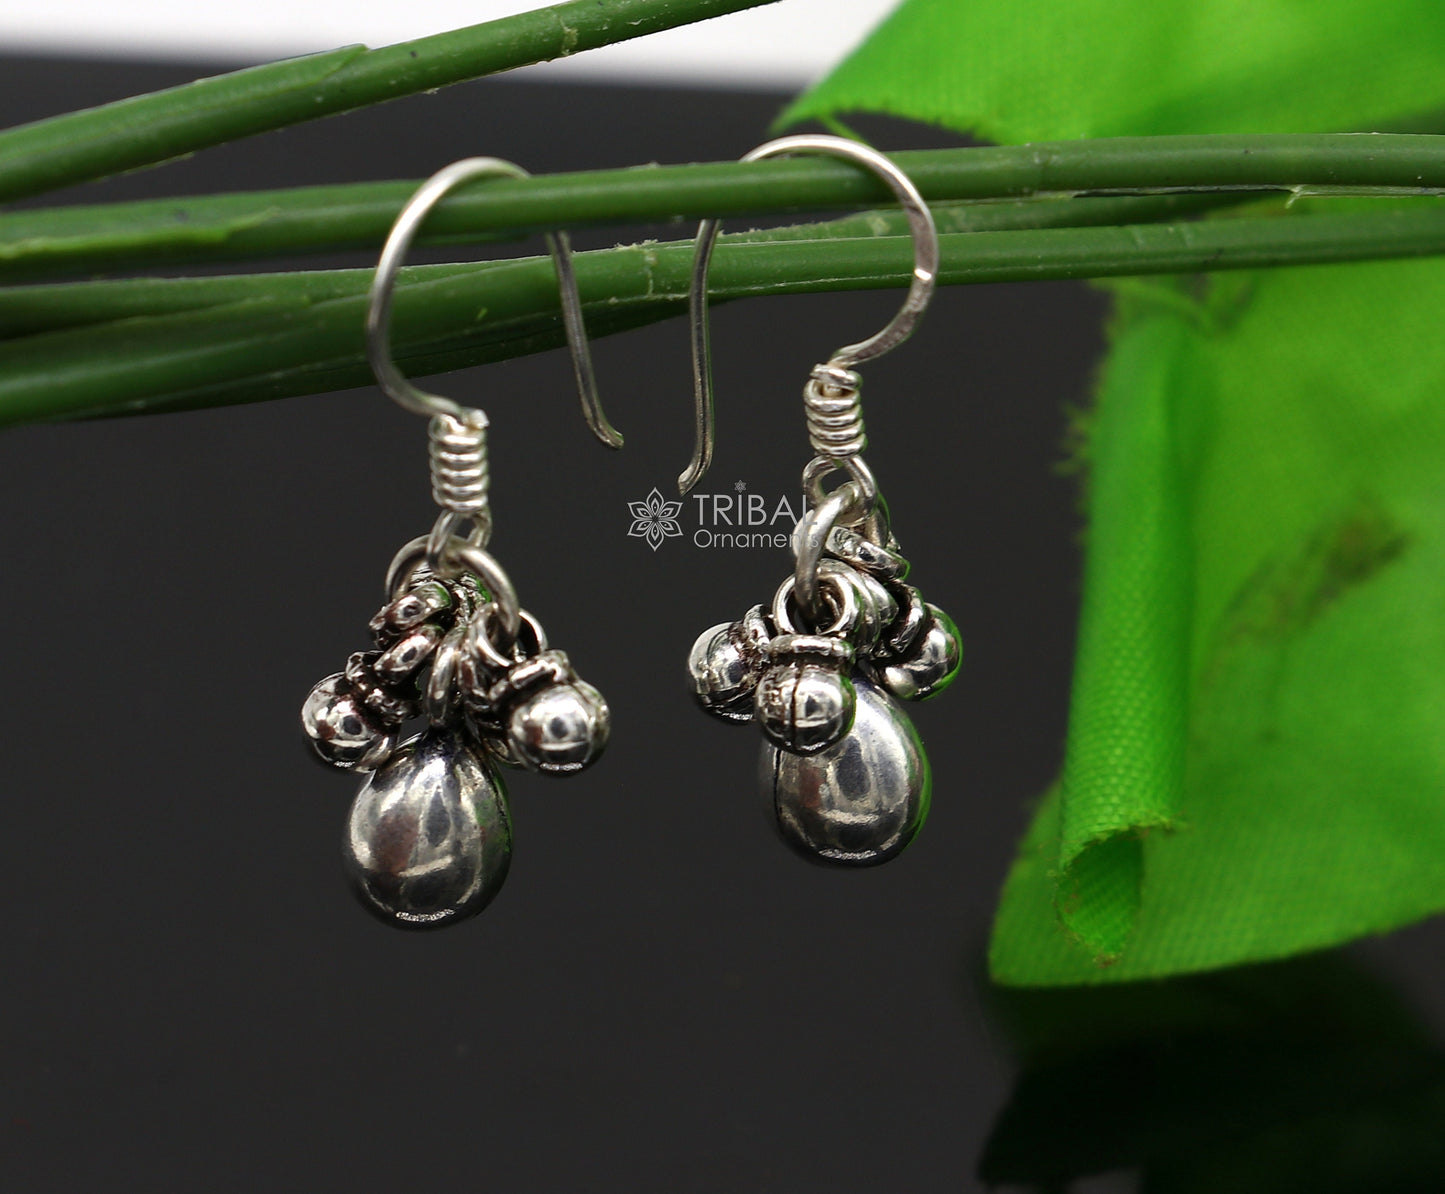 Traditional cultural trendy 925 sterling silver customized hoops earrings, fabulous hanging drops dangle earrings tribal jewelry s1151 - TRIBAL ORNAMENTS